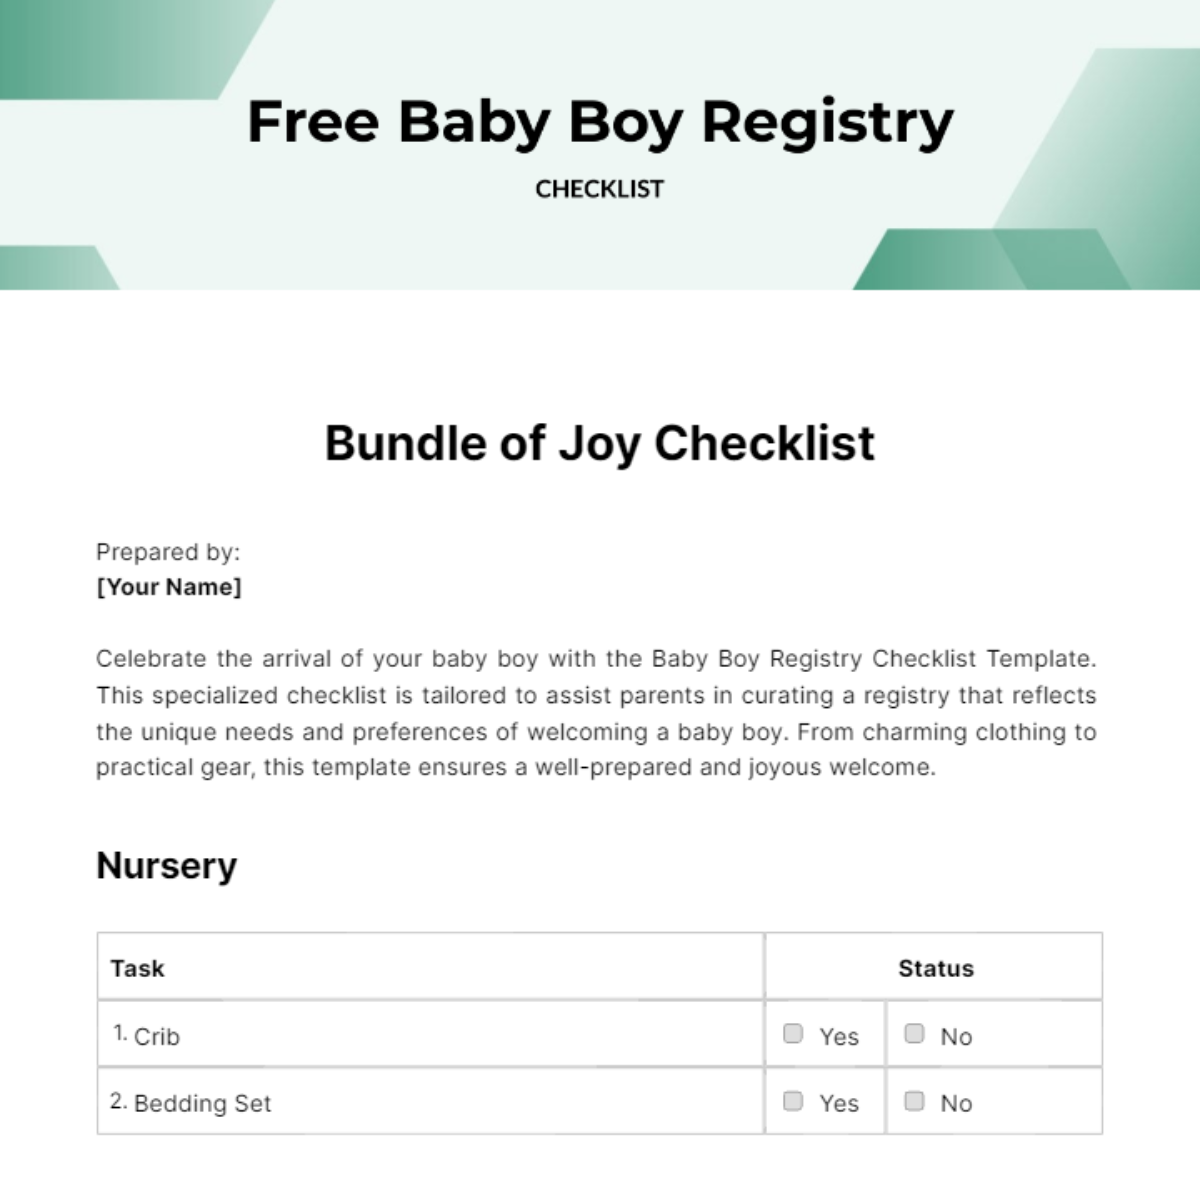 Free Baby Boy Registry Checklist Template